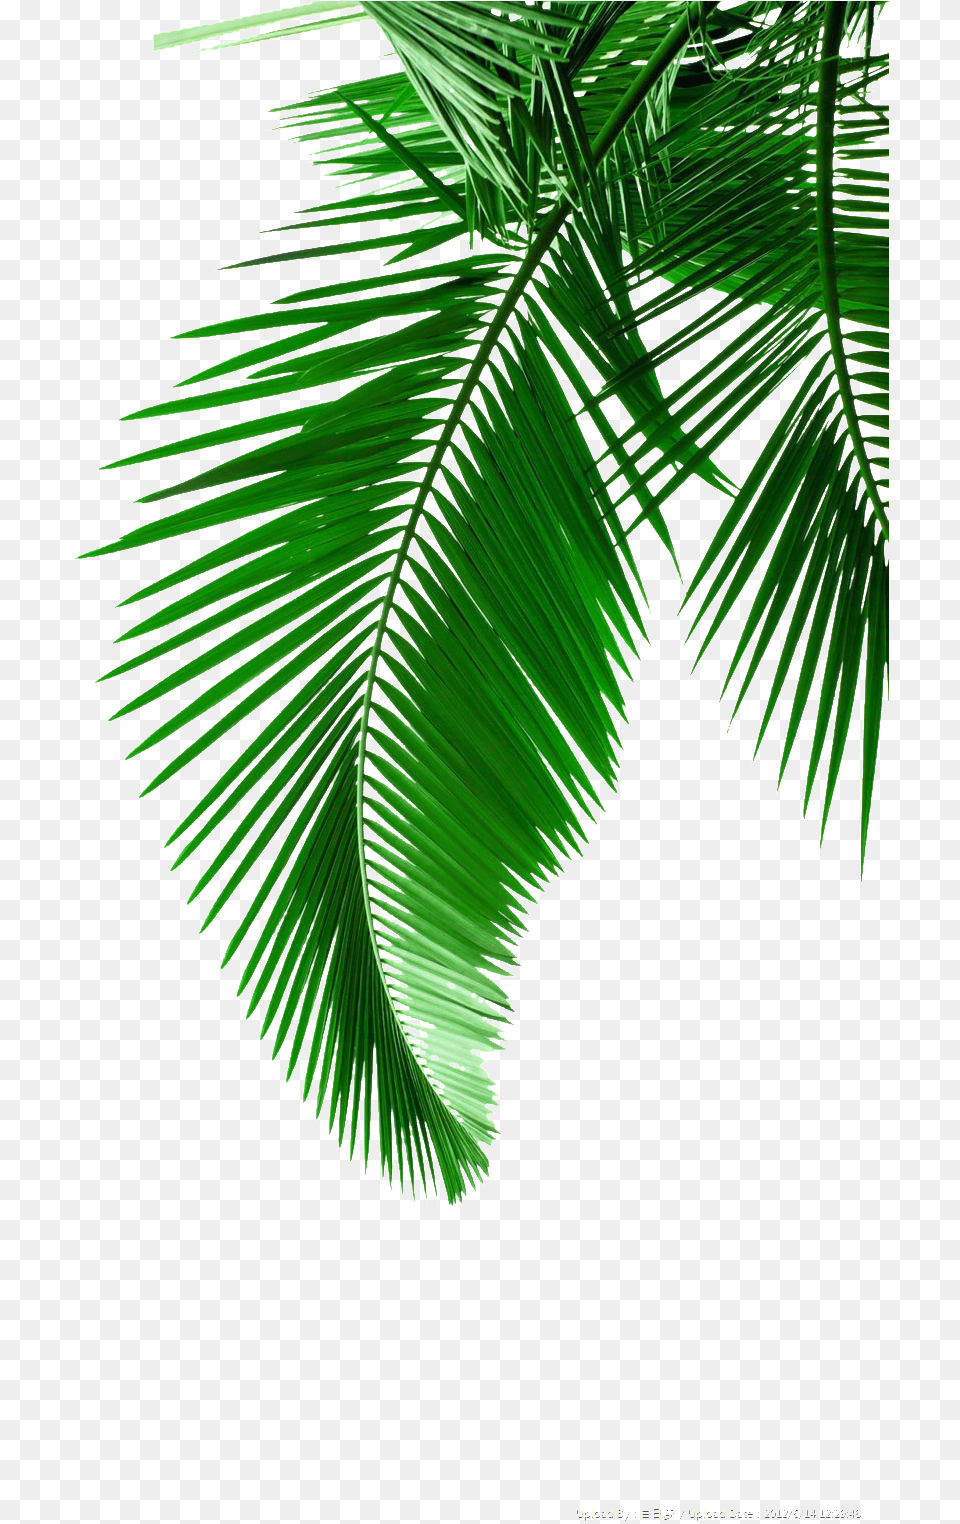 Creative Green Leaf Drawing Decorative Palm Leaves Clip Art, Palm Tree, Tree, Plant, Vegetation Free Transparent Png